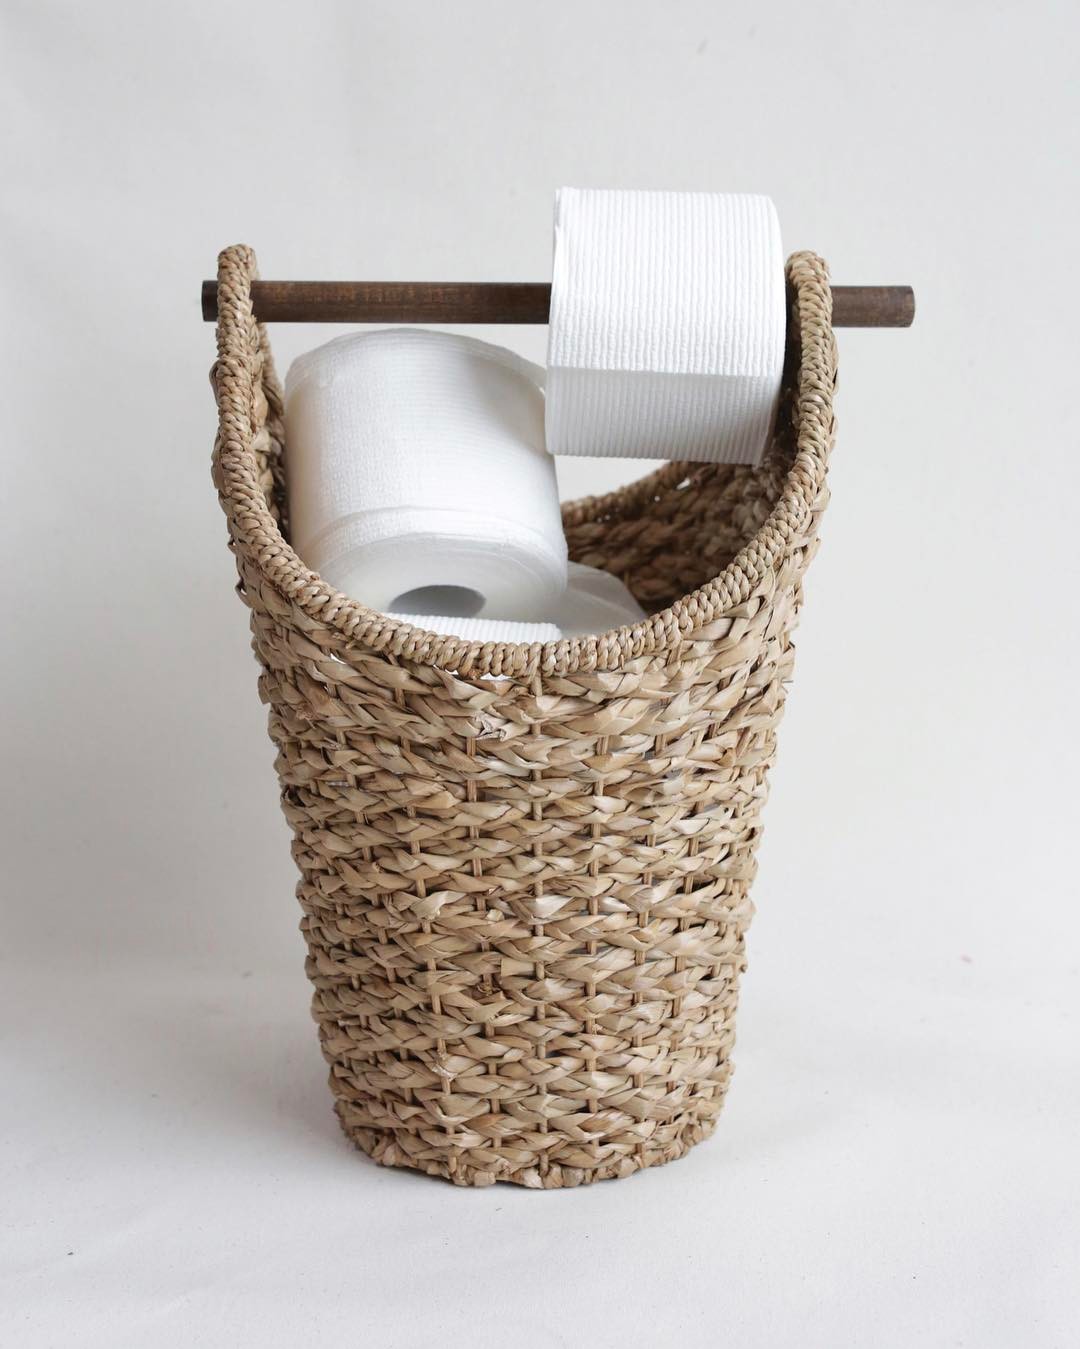 Braided Toilet Paper Basket. Photo by Instagram user @antiquefarmhouse